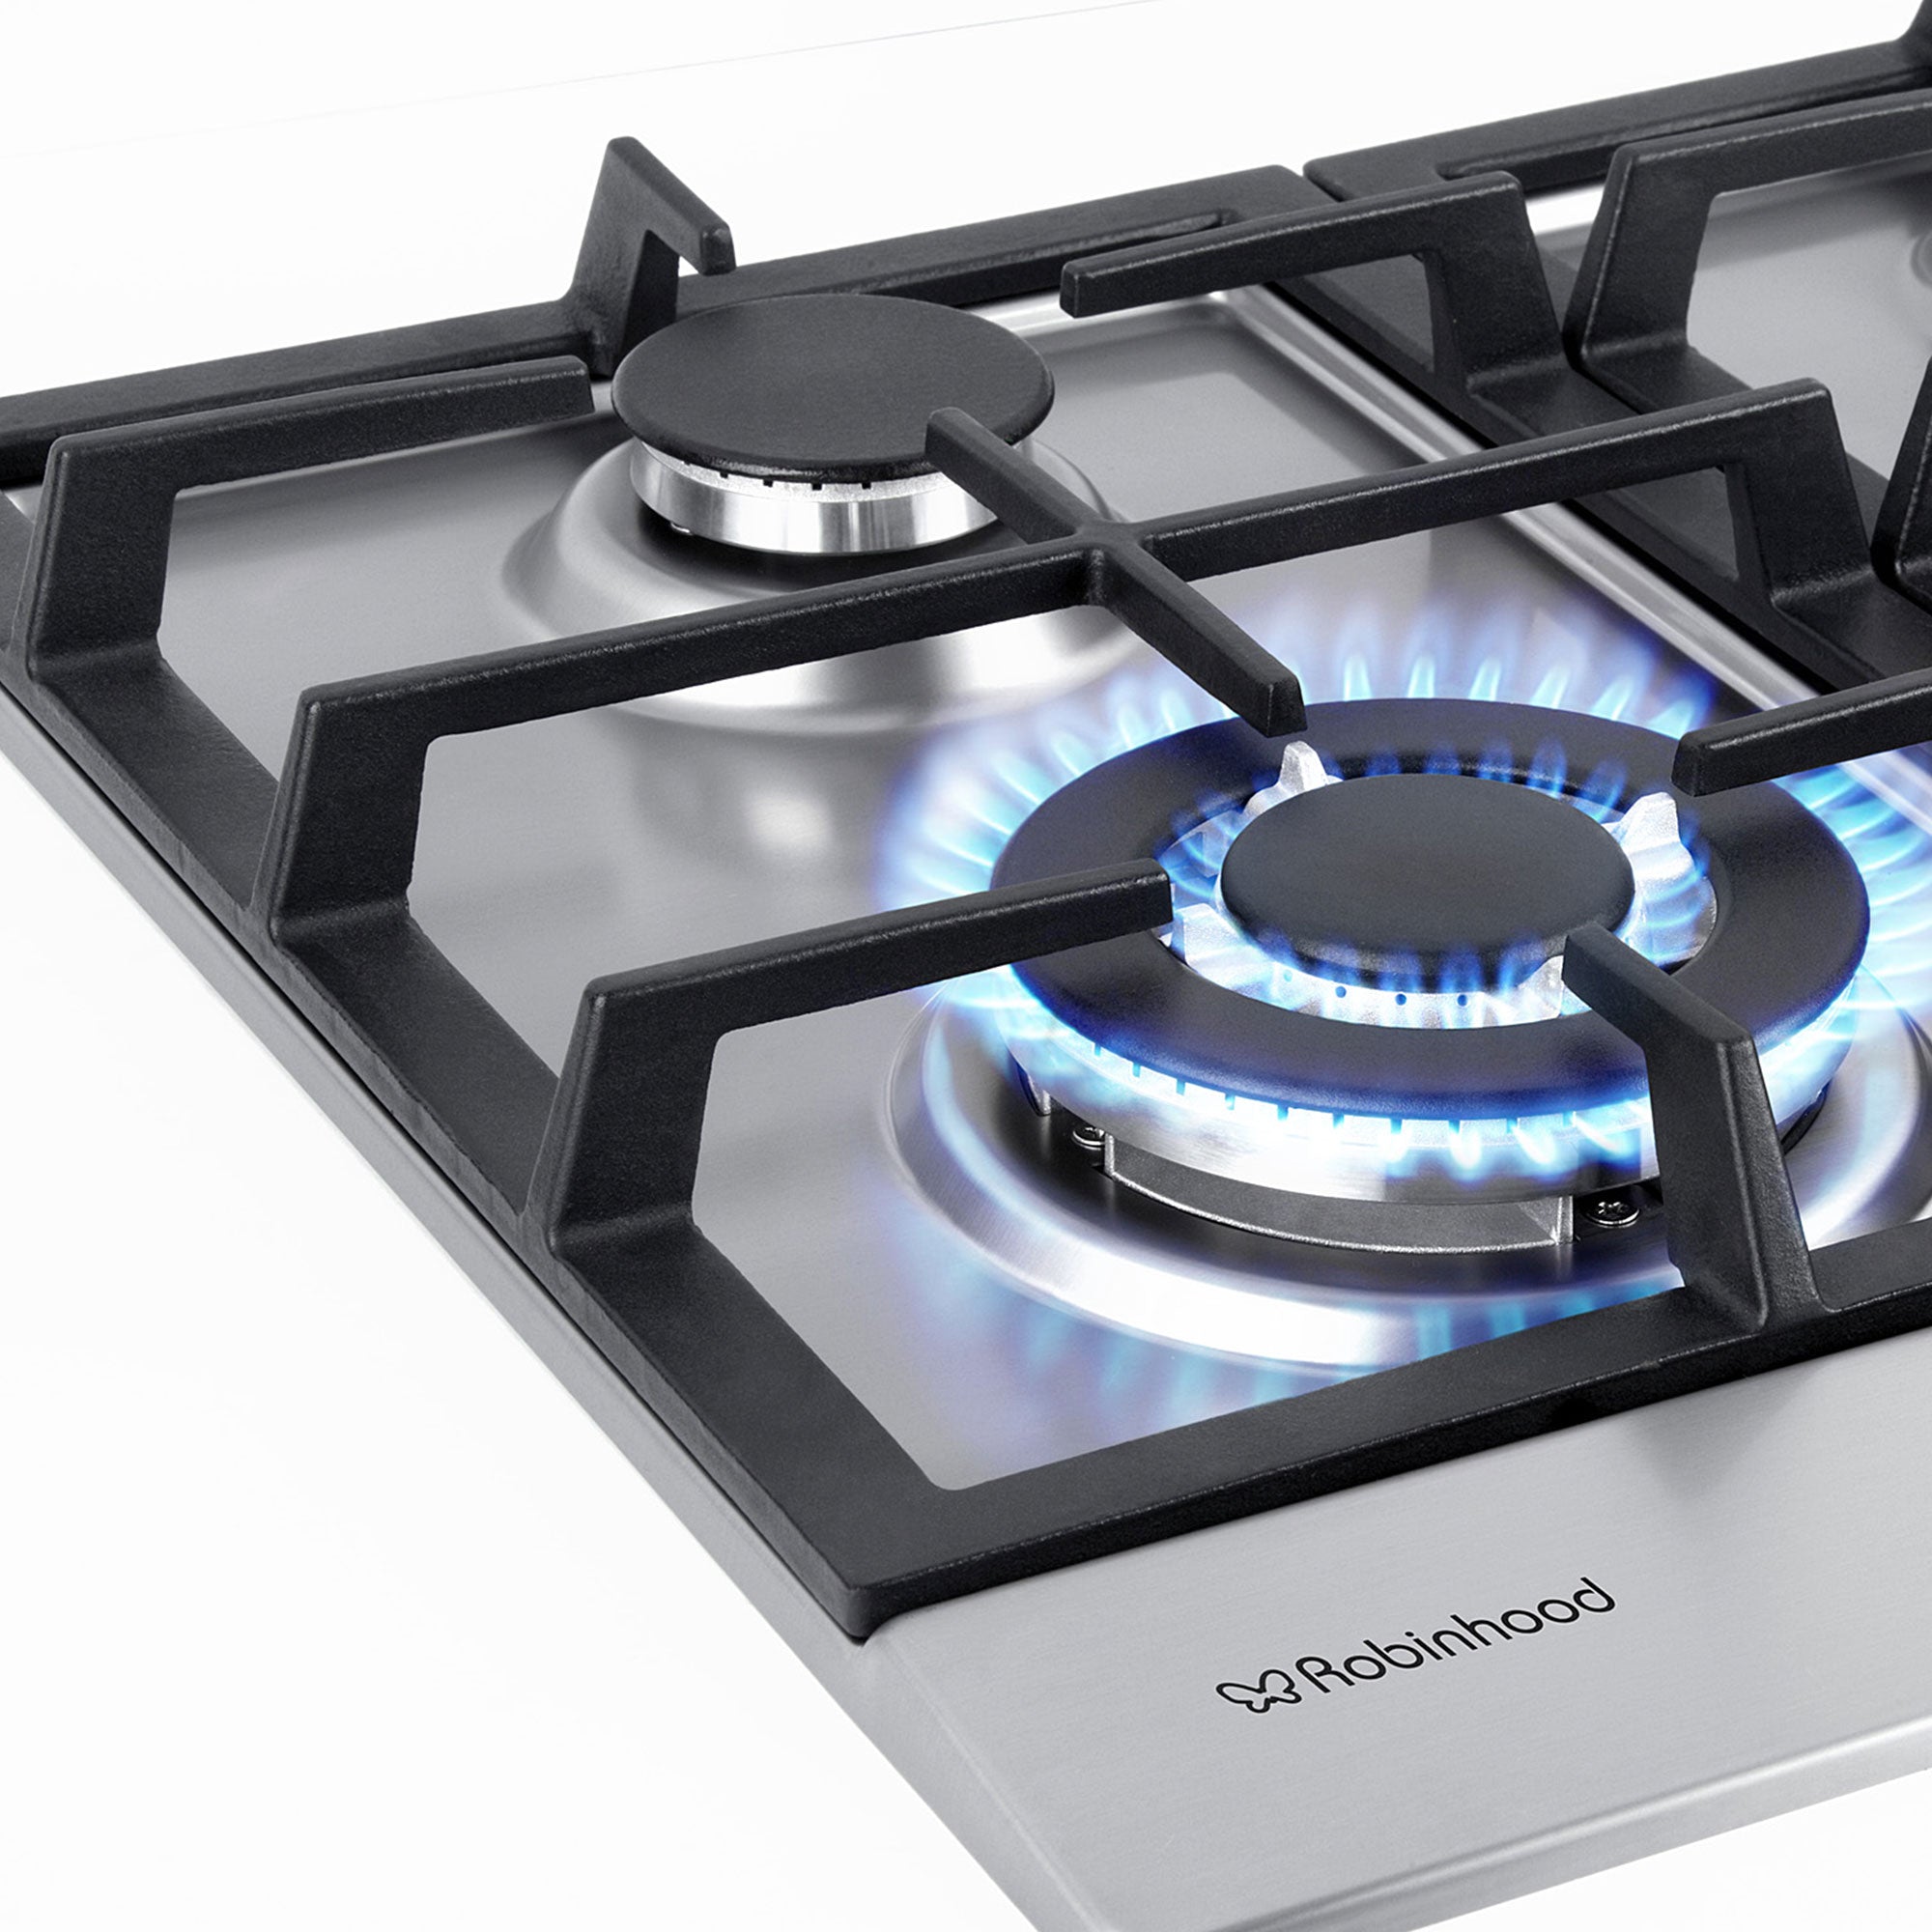 4 burner gas cooktop